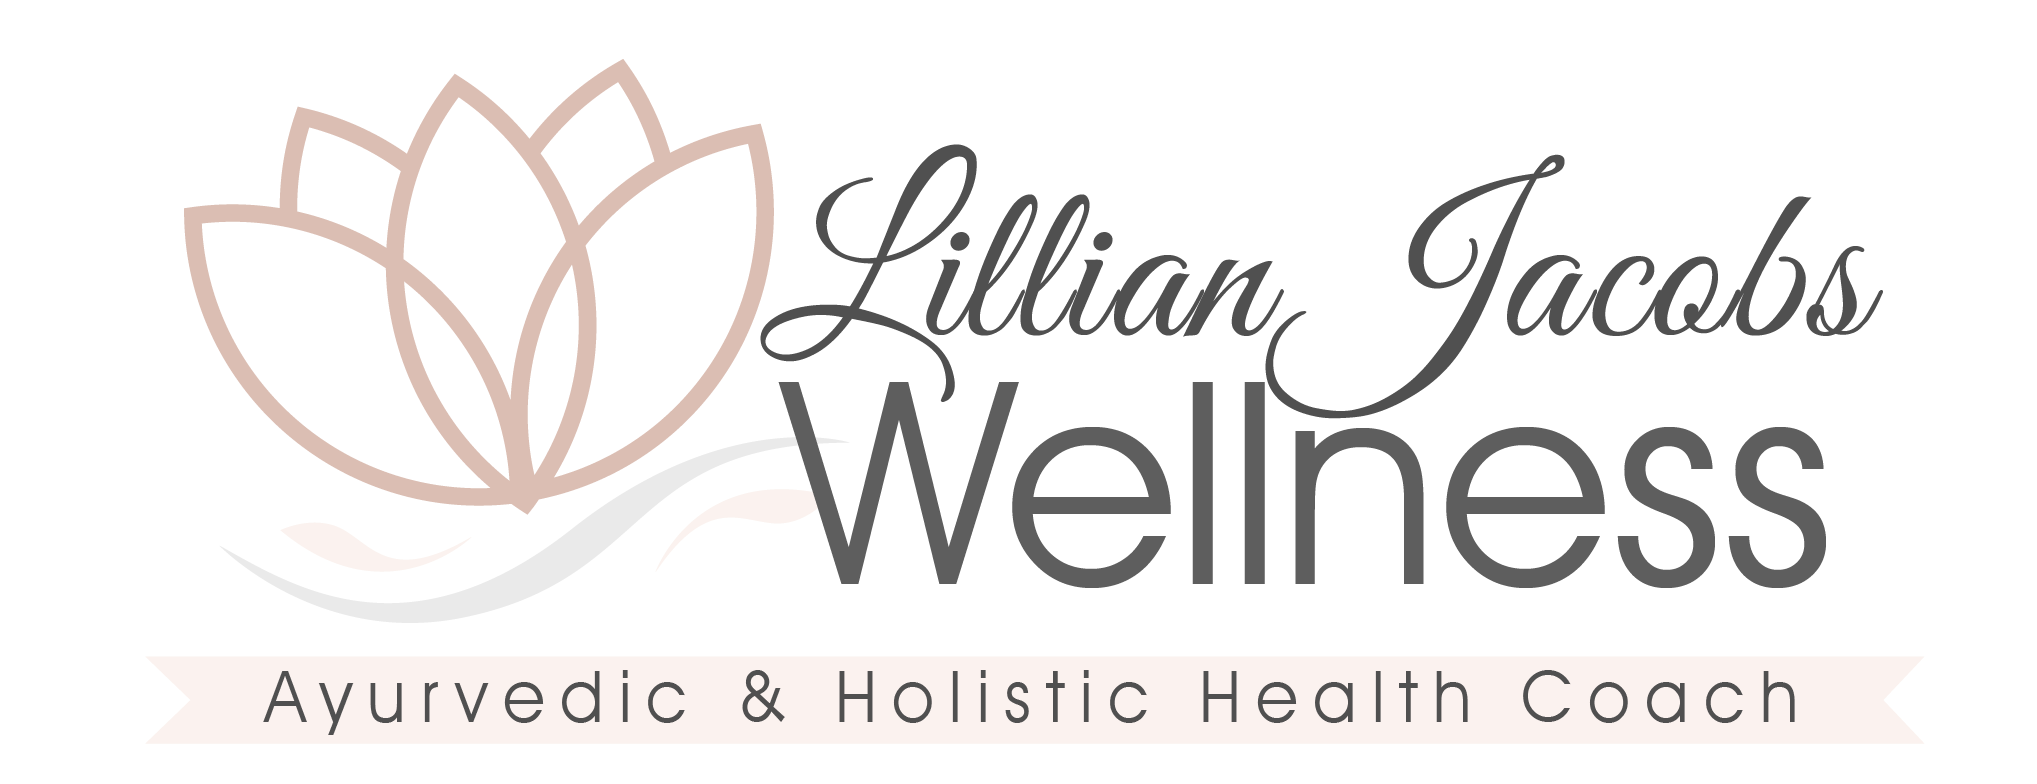 Lillian Jacobs Wellness - Ayurvedic and Holistic Health Coach's Logo